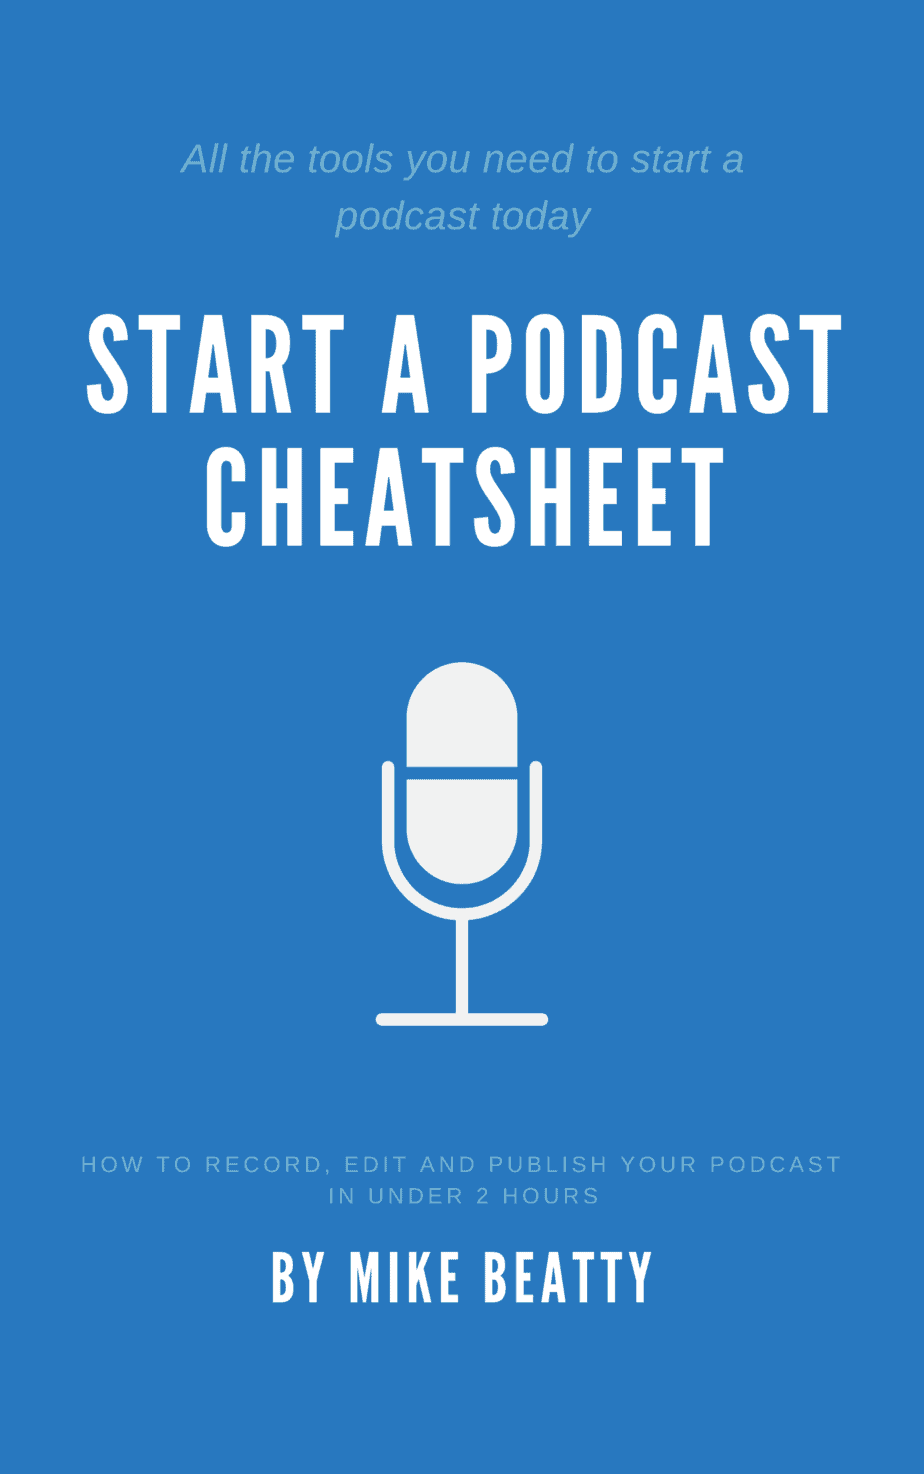 Start a podcast cheatsheet